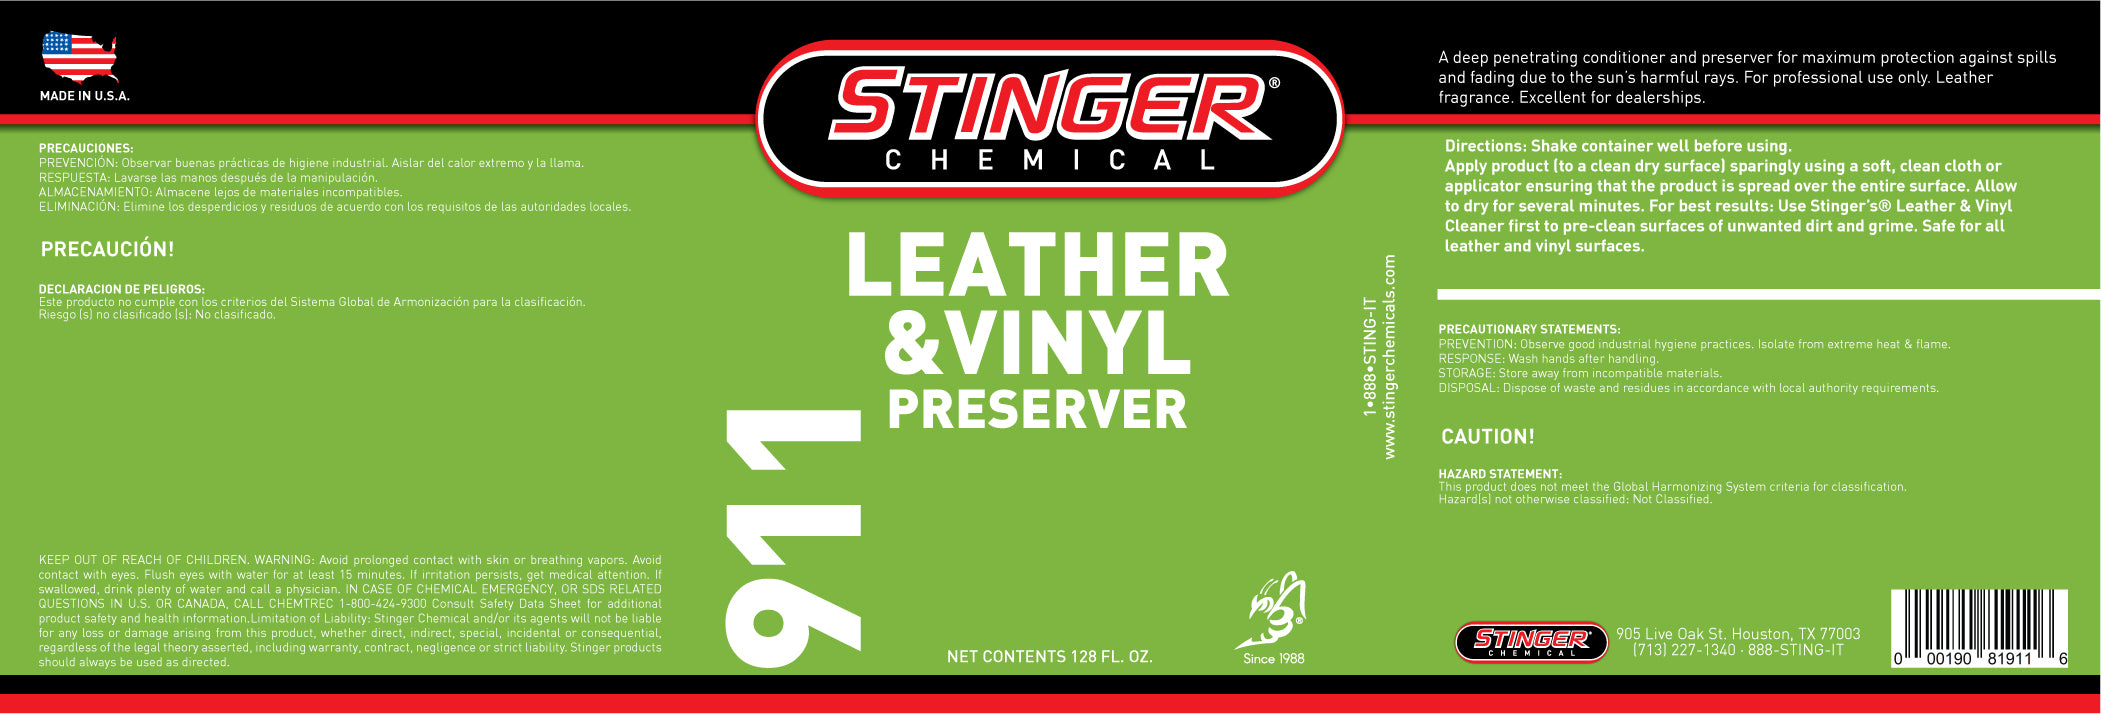 stinger-911-label